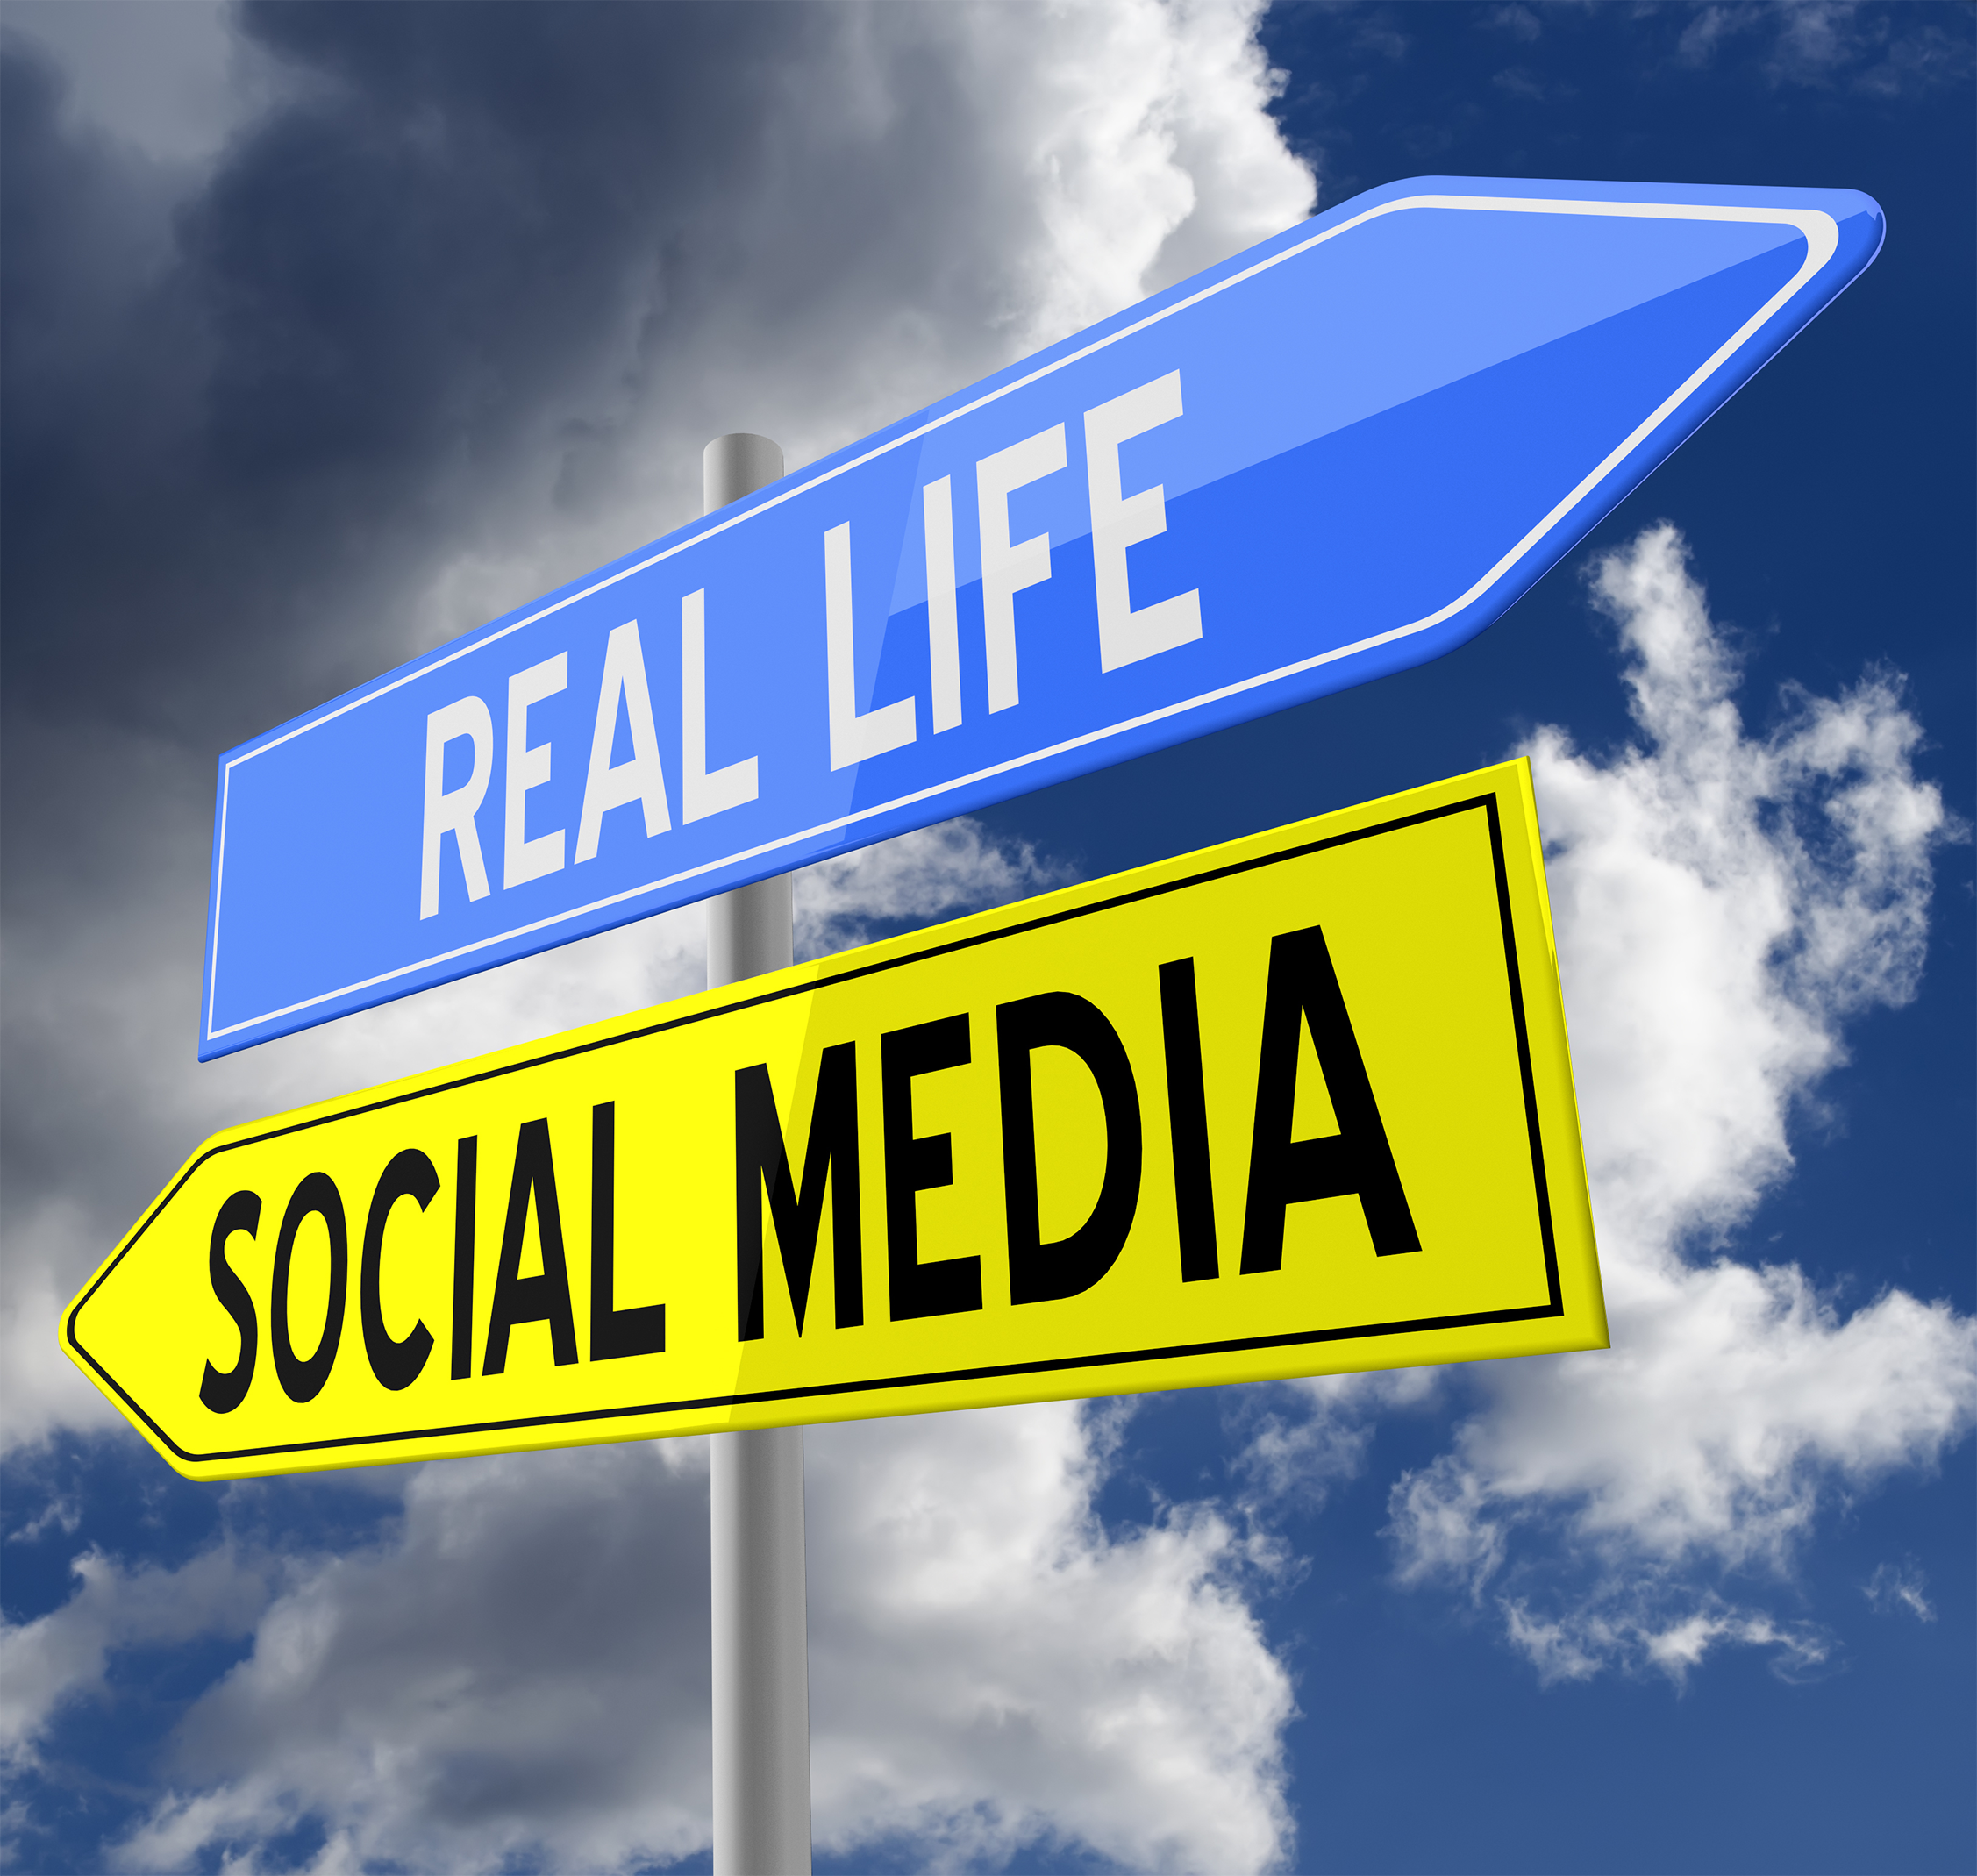 Social Media vs. “Real Life”: Why Brands Should Care